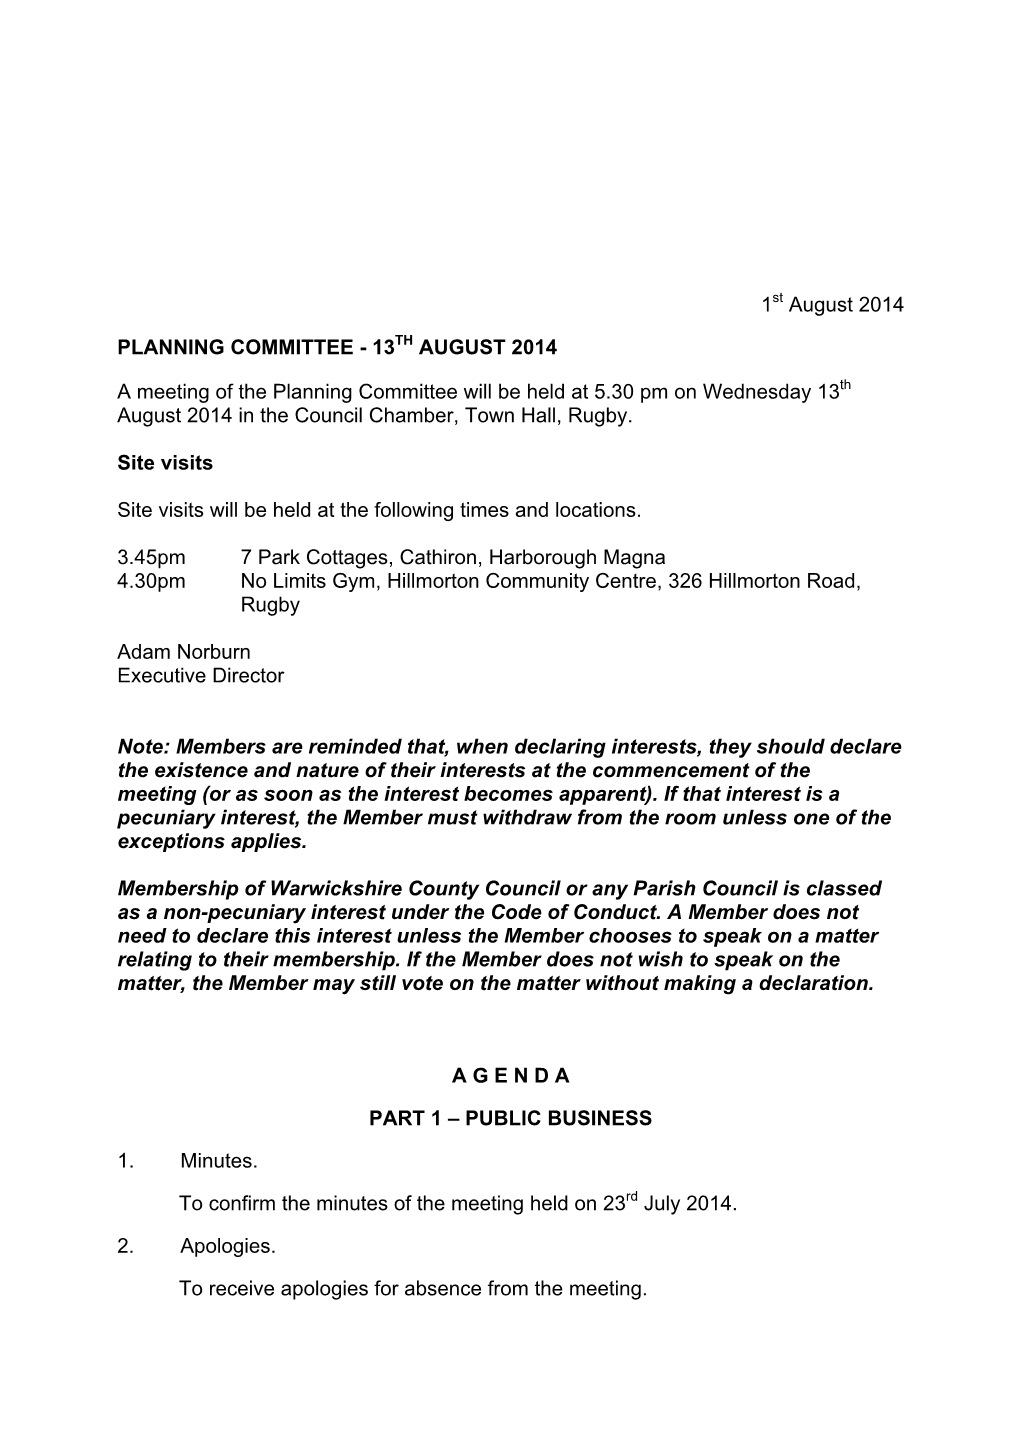 Planning Committee Agenda 13 August 2014